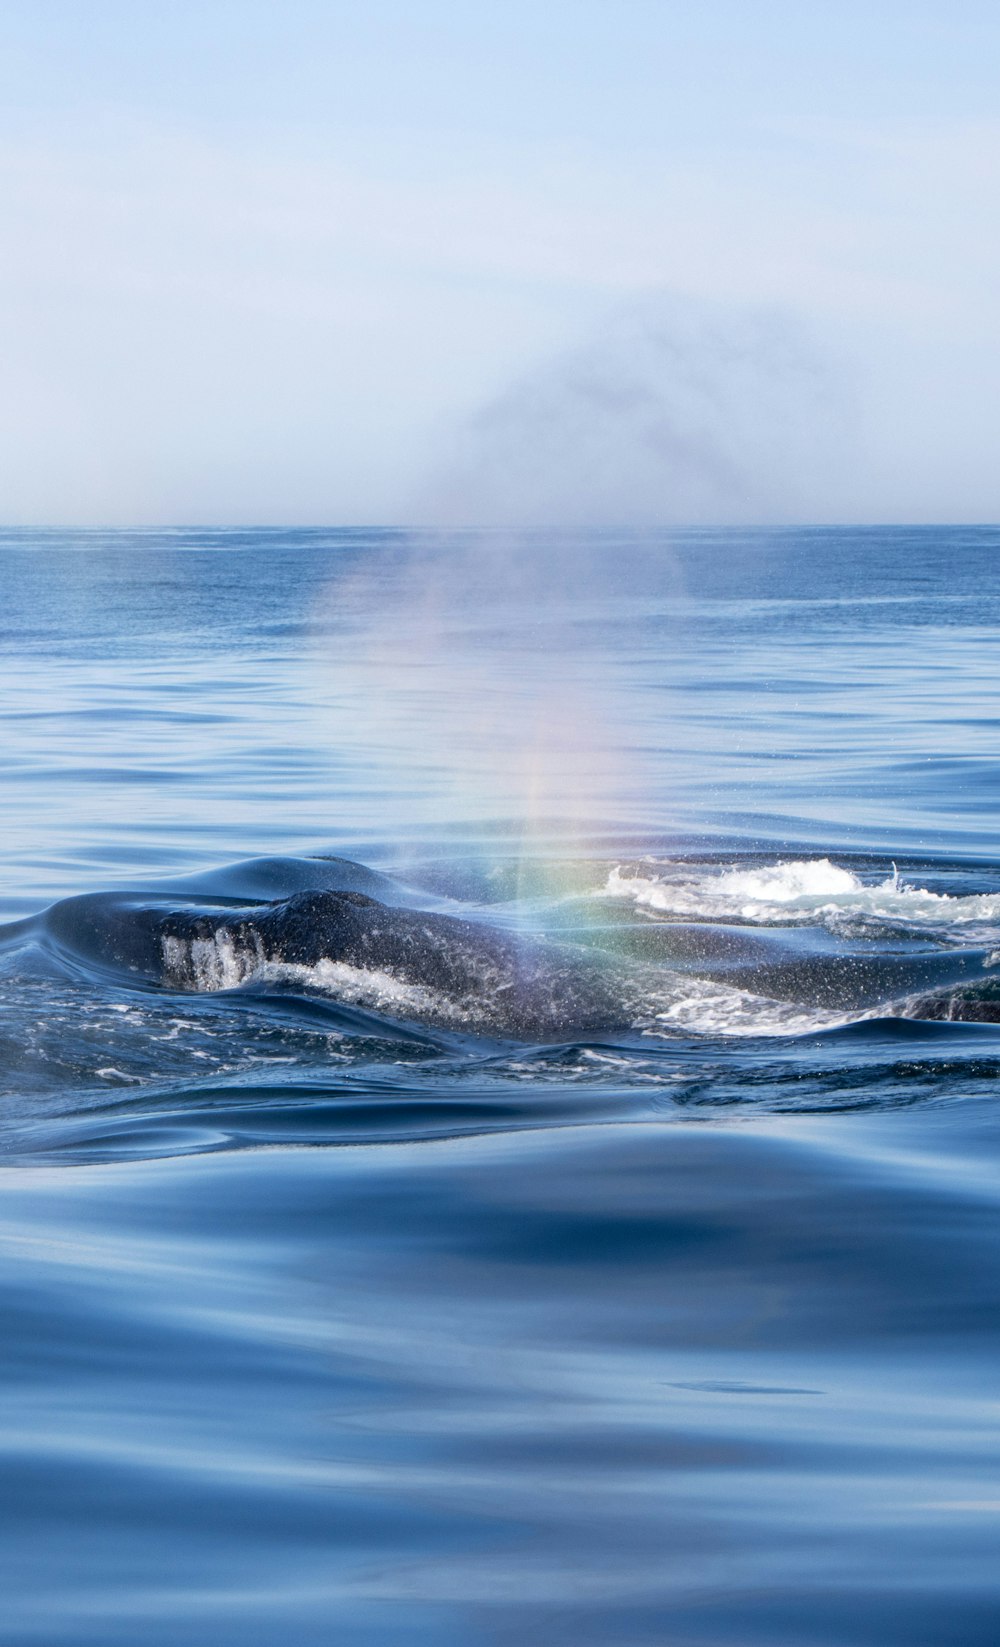 Una ballena saltando fuera del agua